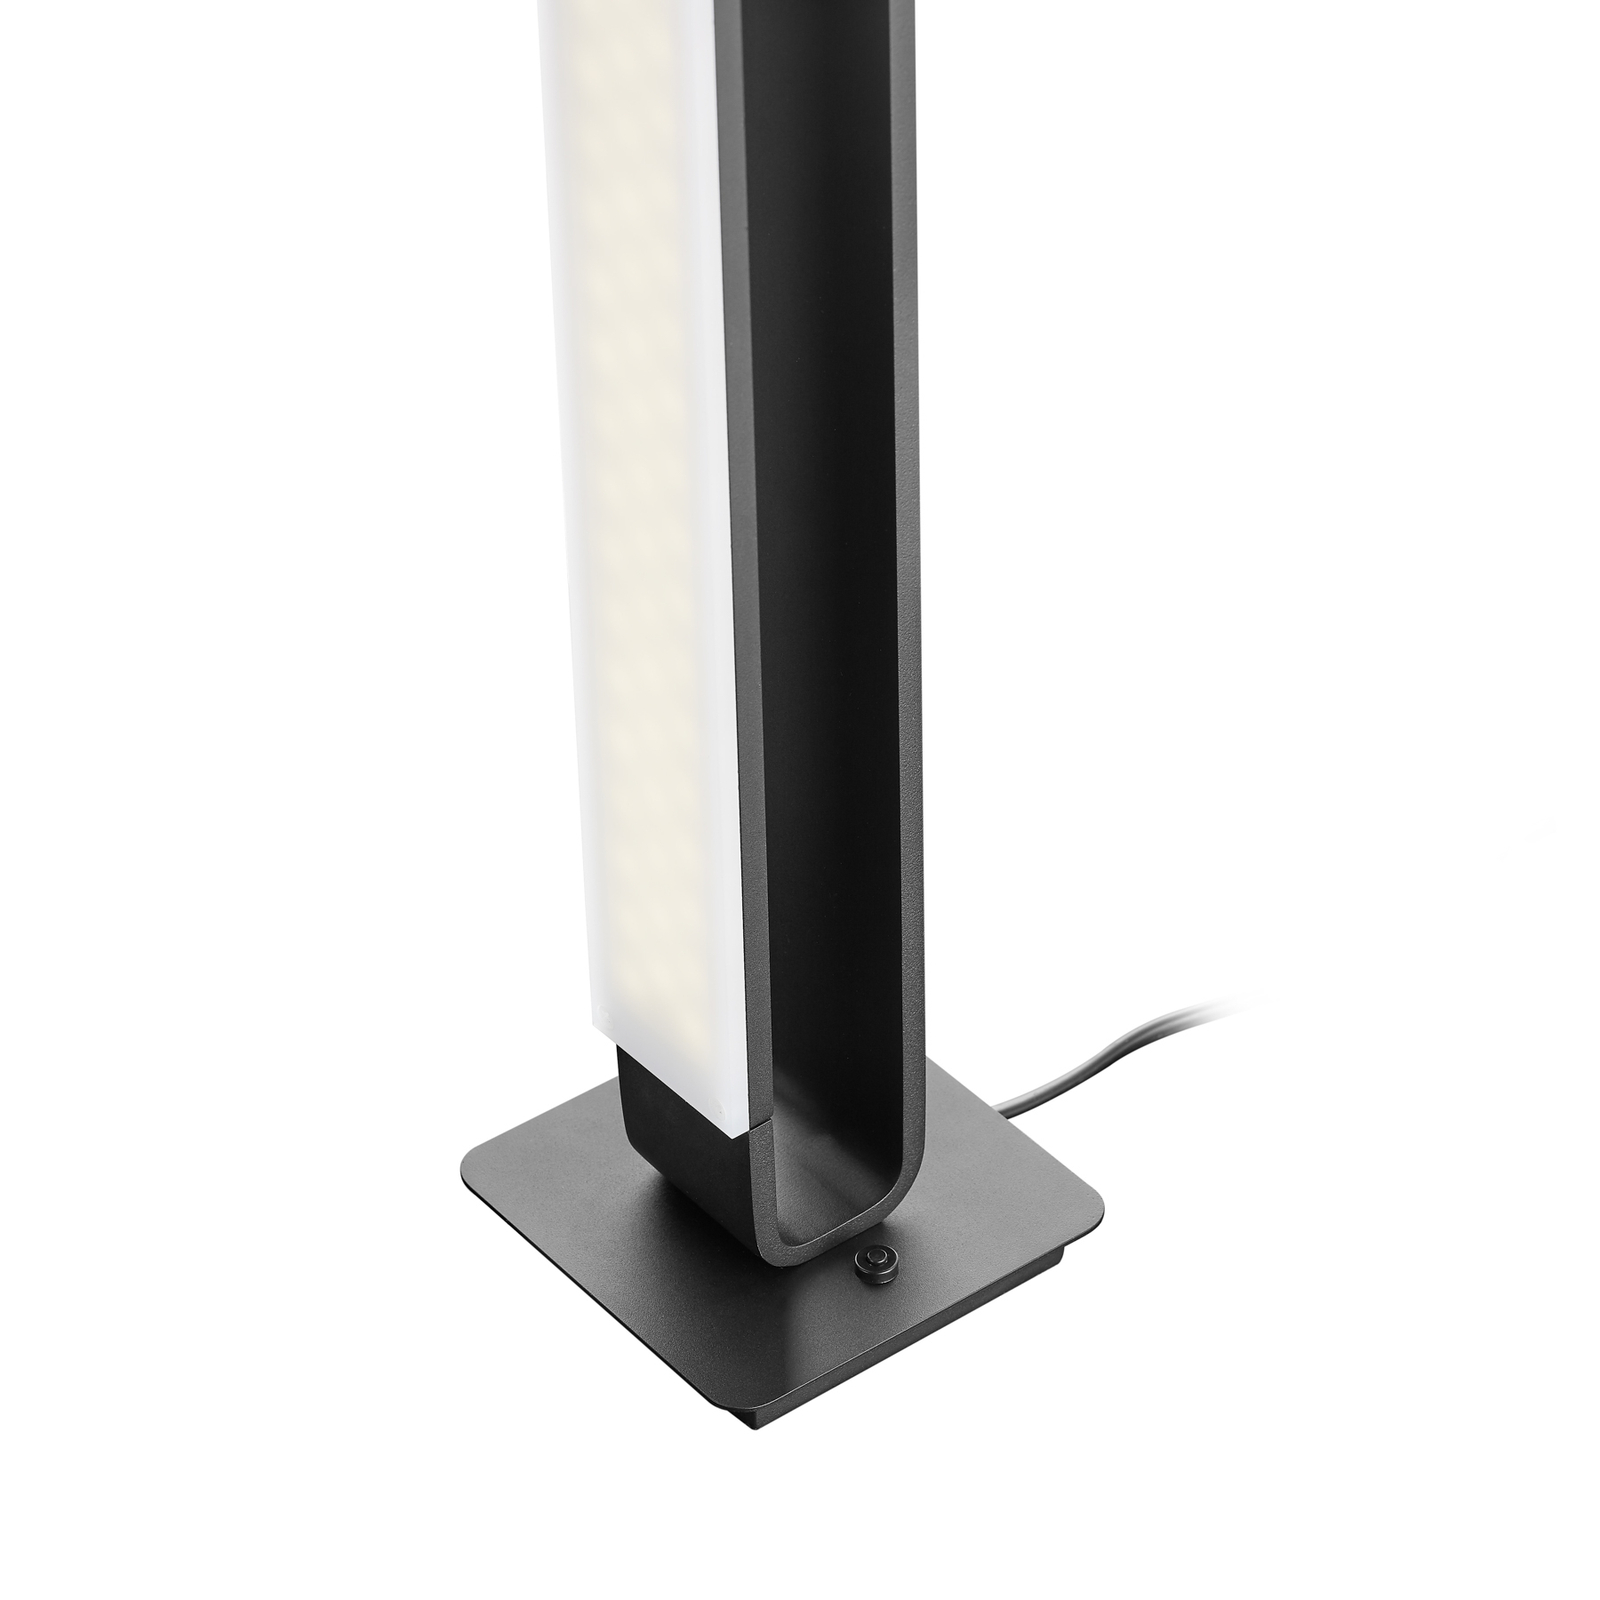 Box LED table lamp, rotatable, black